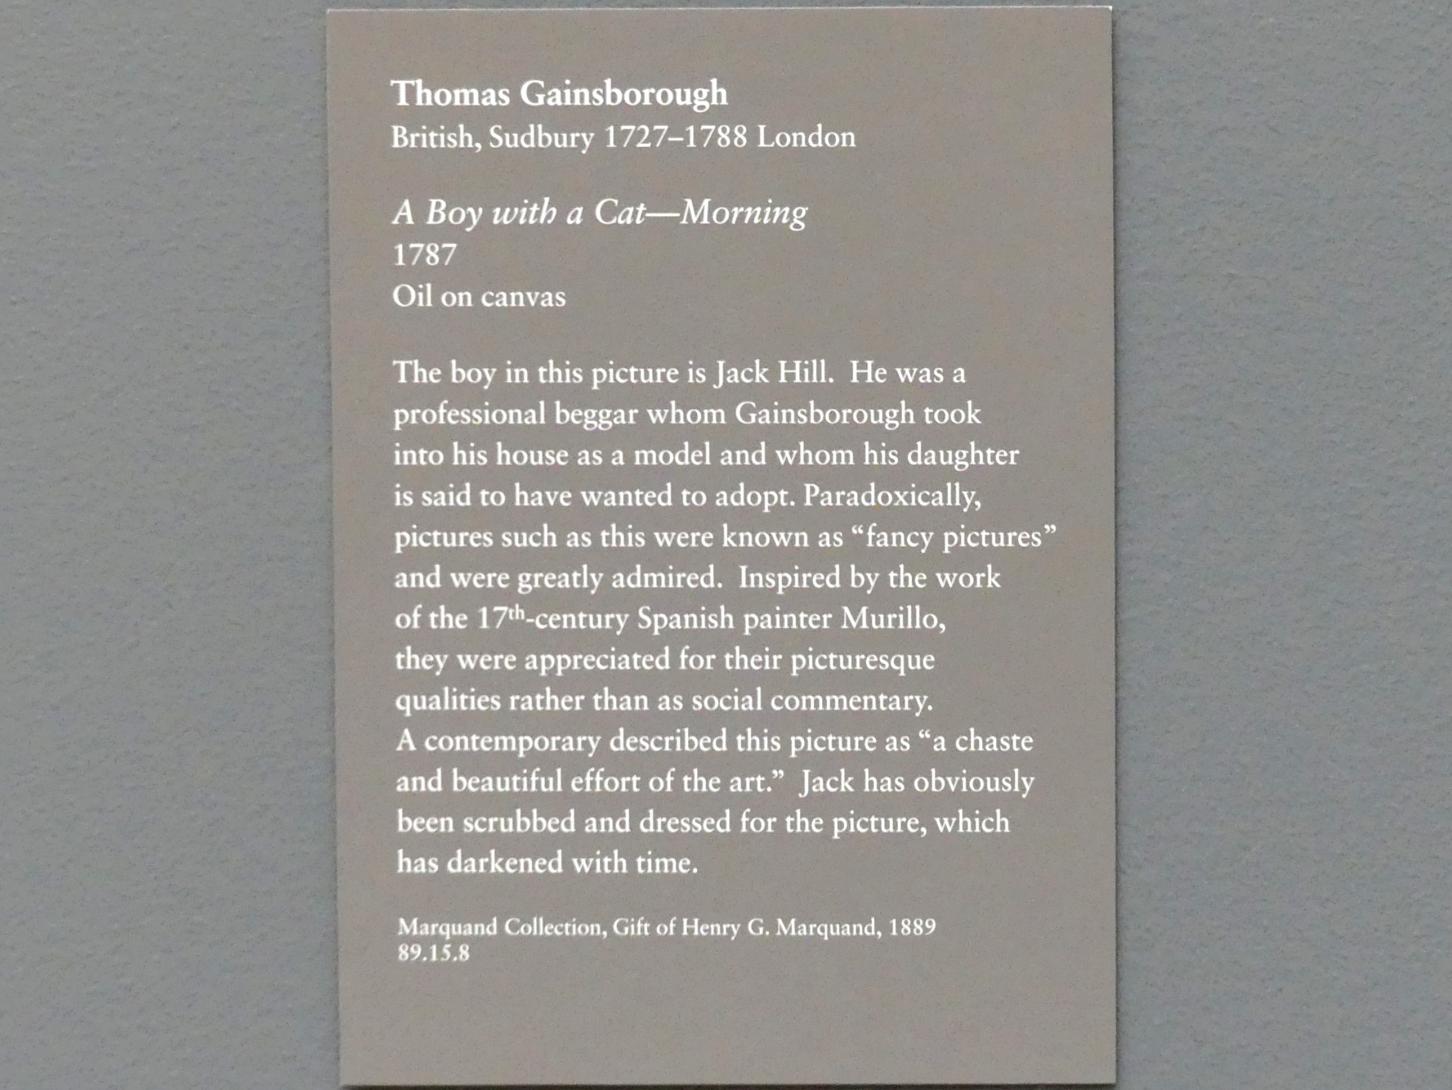 Thomas Gainsborough (1748–1788), Junge mit Katze - Der Morgen, New York, Metropolitan Museum of Art (Met), Saal 629, 1787, Bild 2/2